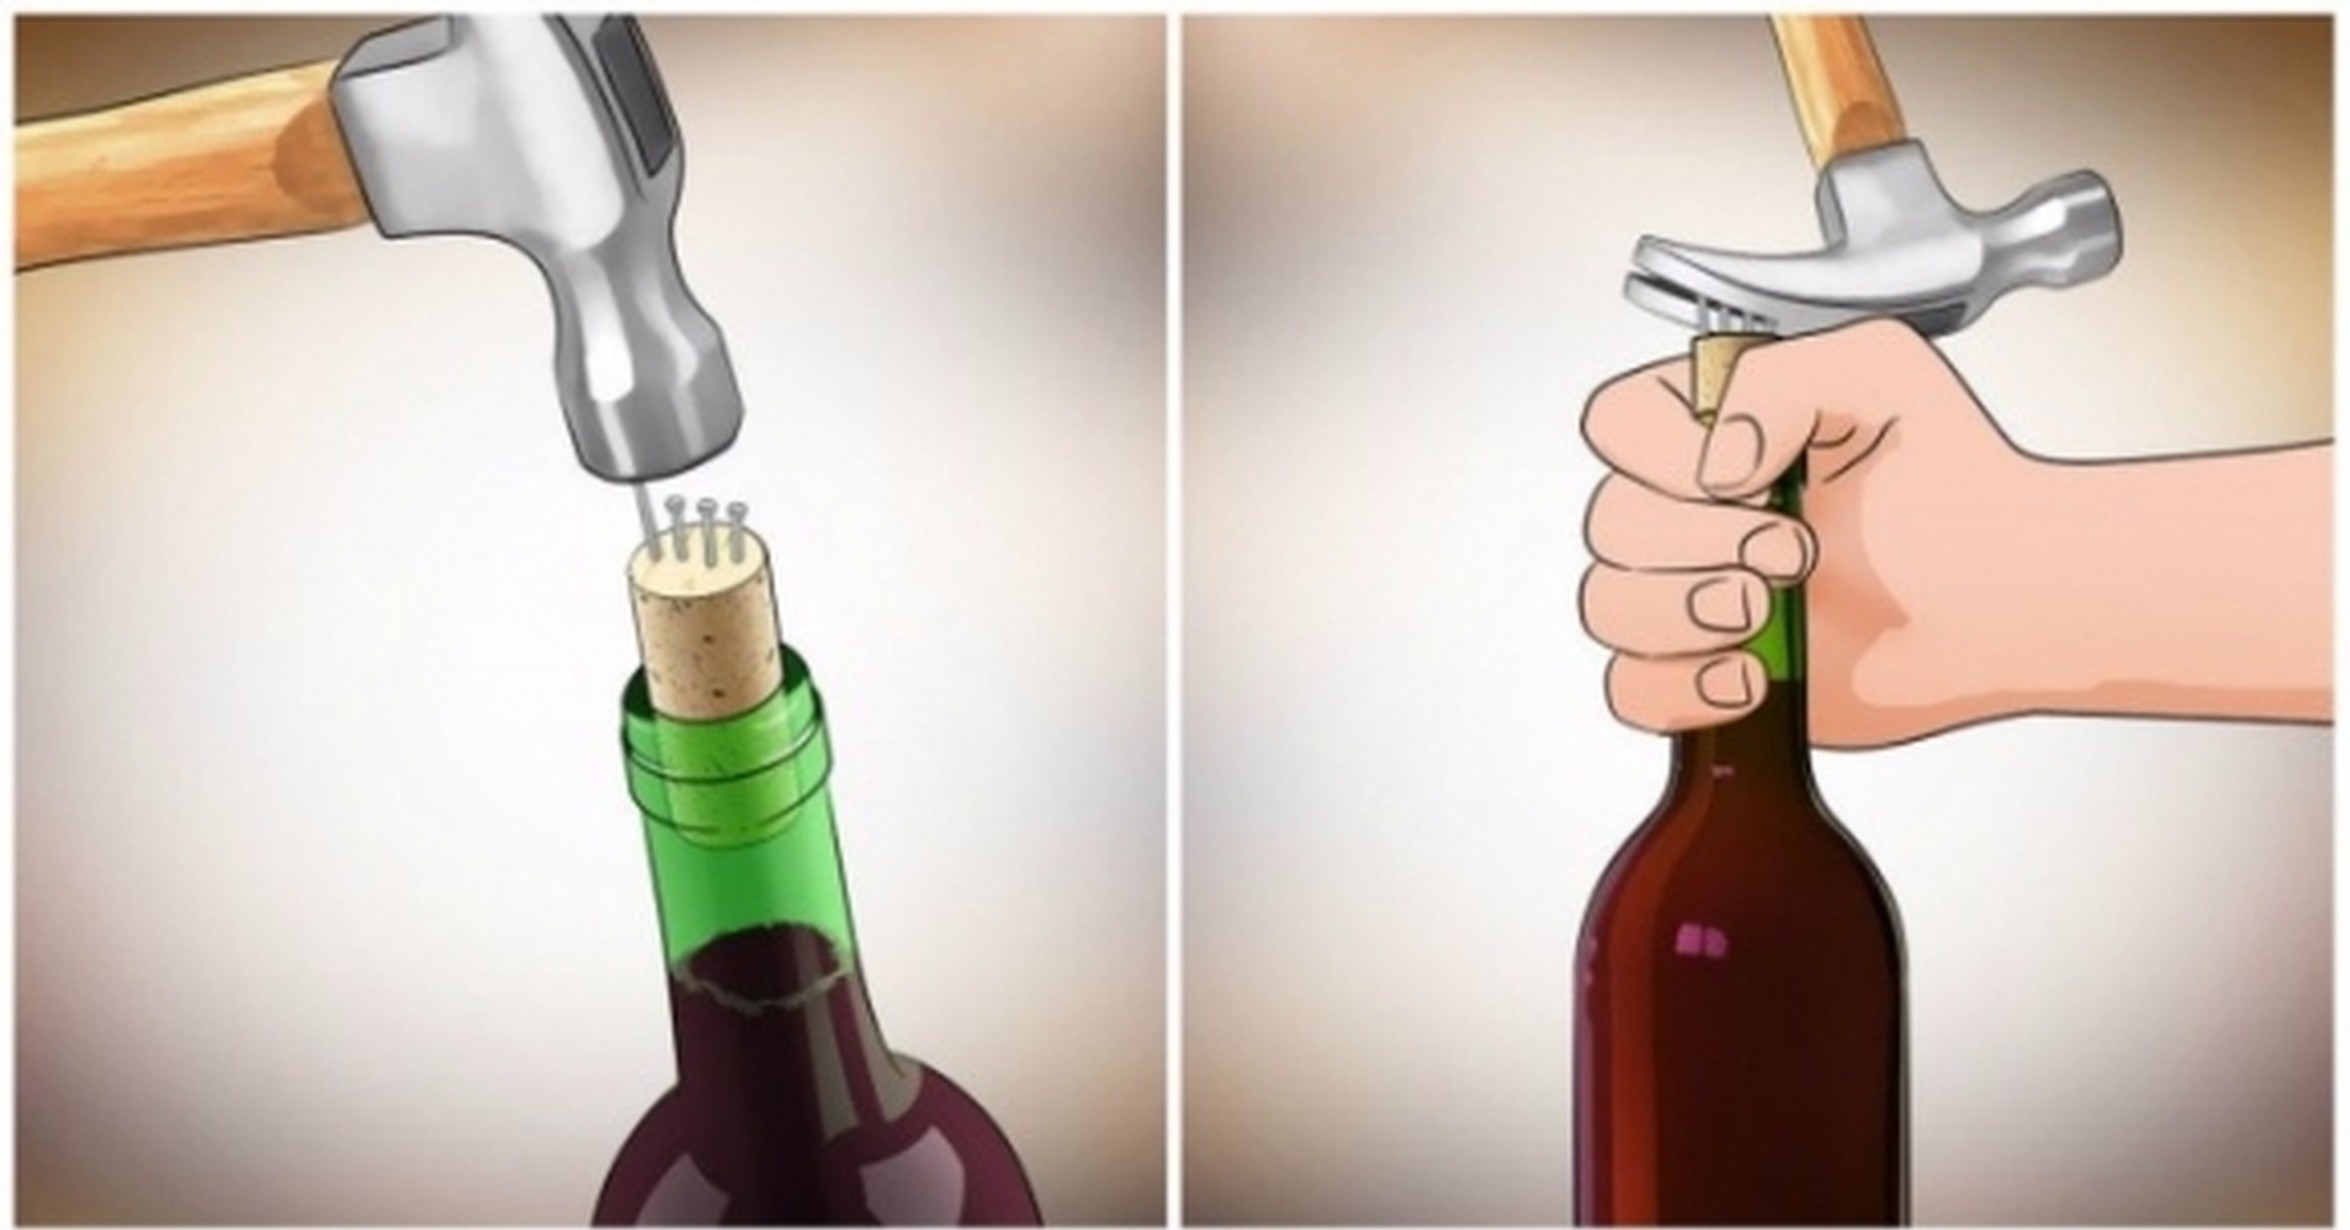 Начатый закупорить. Бутылку вина без штопора. Открыть вино без штопора. Открытие бутылки вина без штопора. Способы открытия вина без штопора.